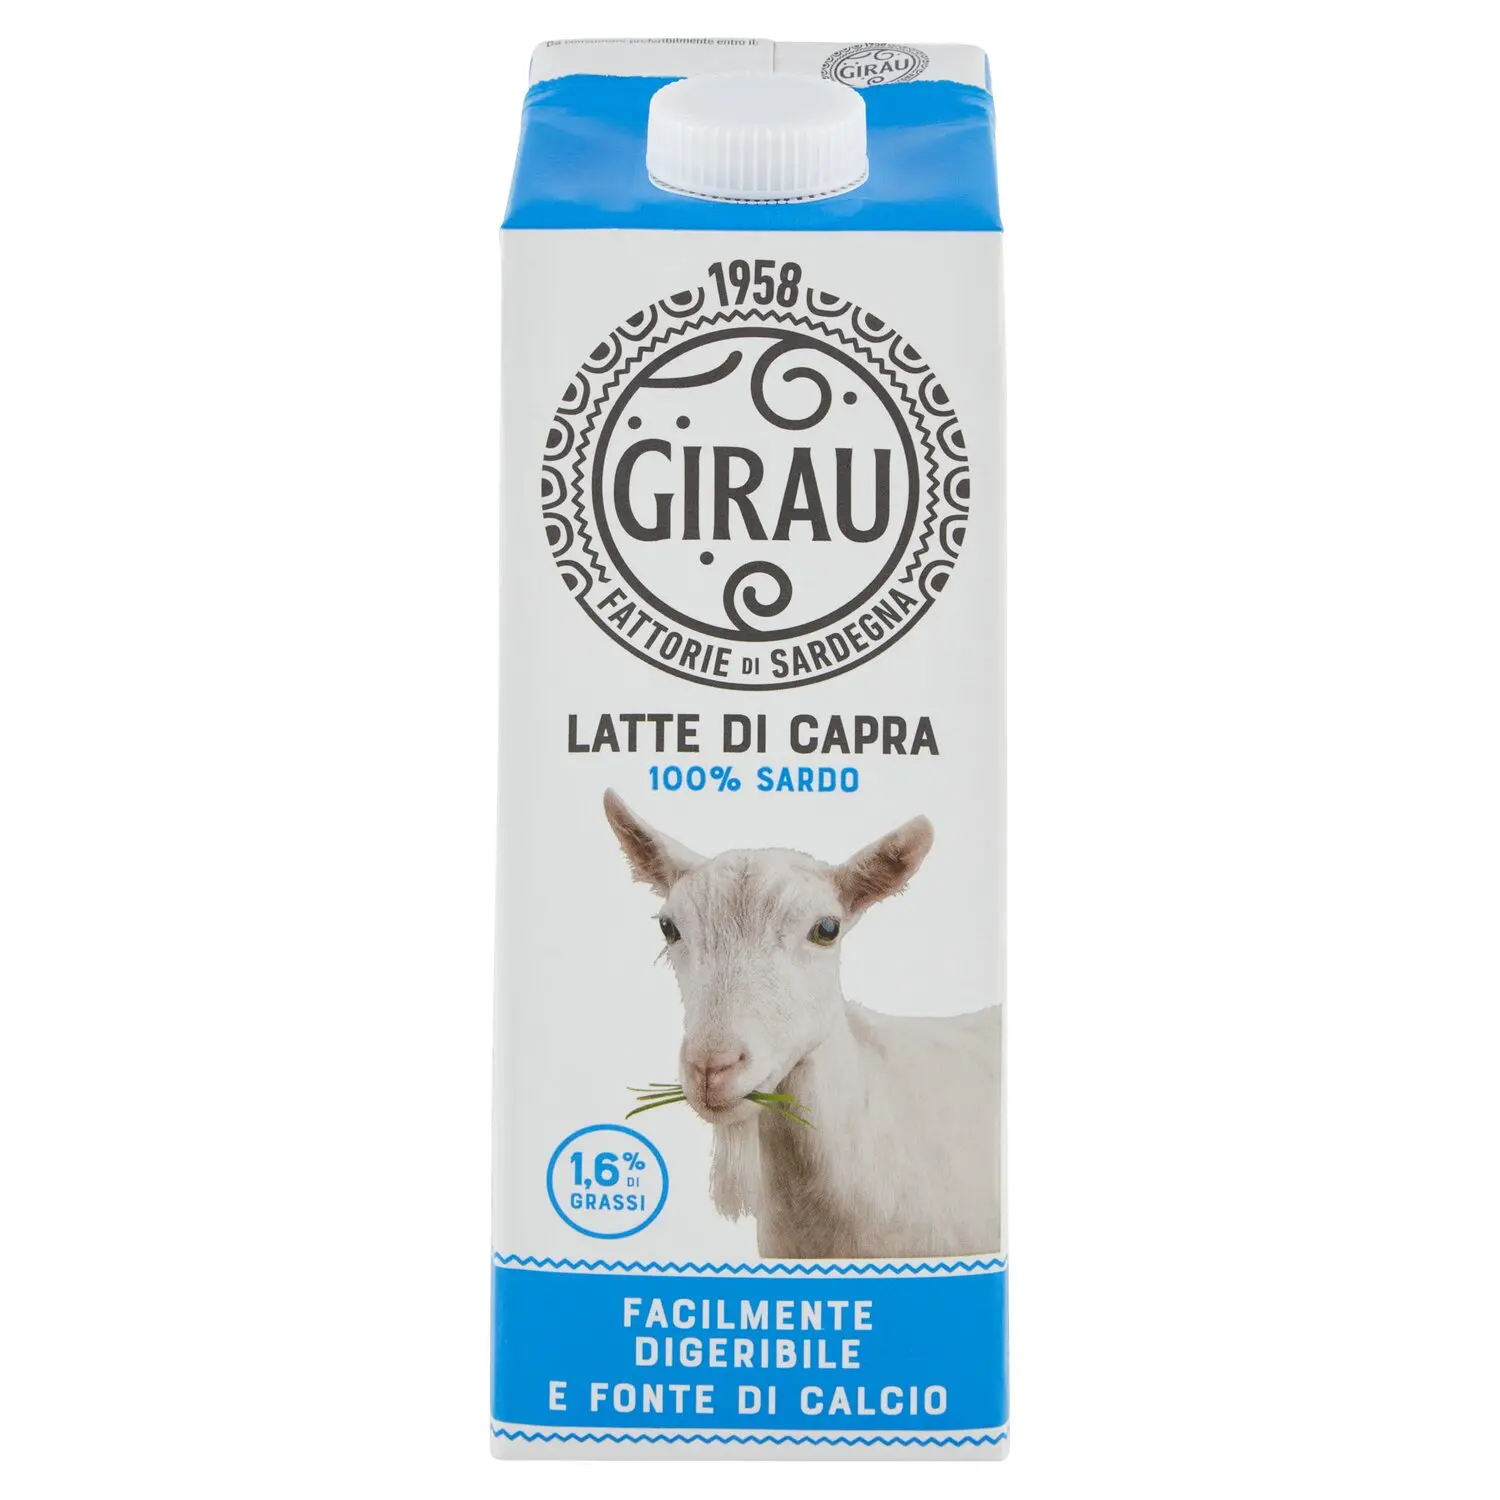 Girau Latte di Capra 100% Sardo 1,6% di Grassi 1000 ml